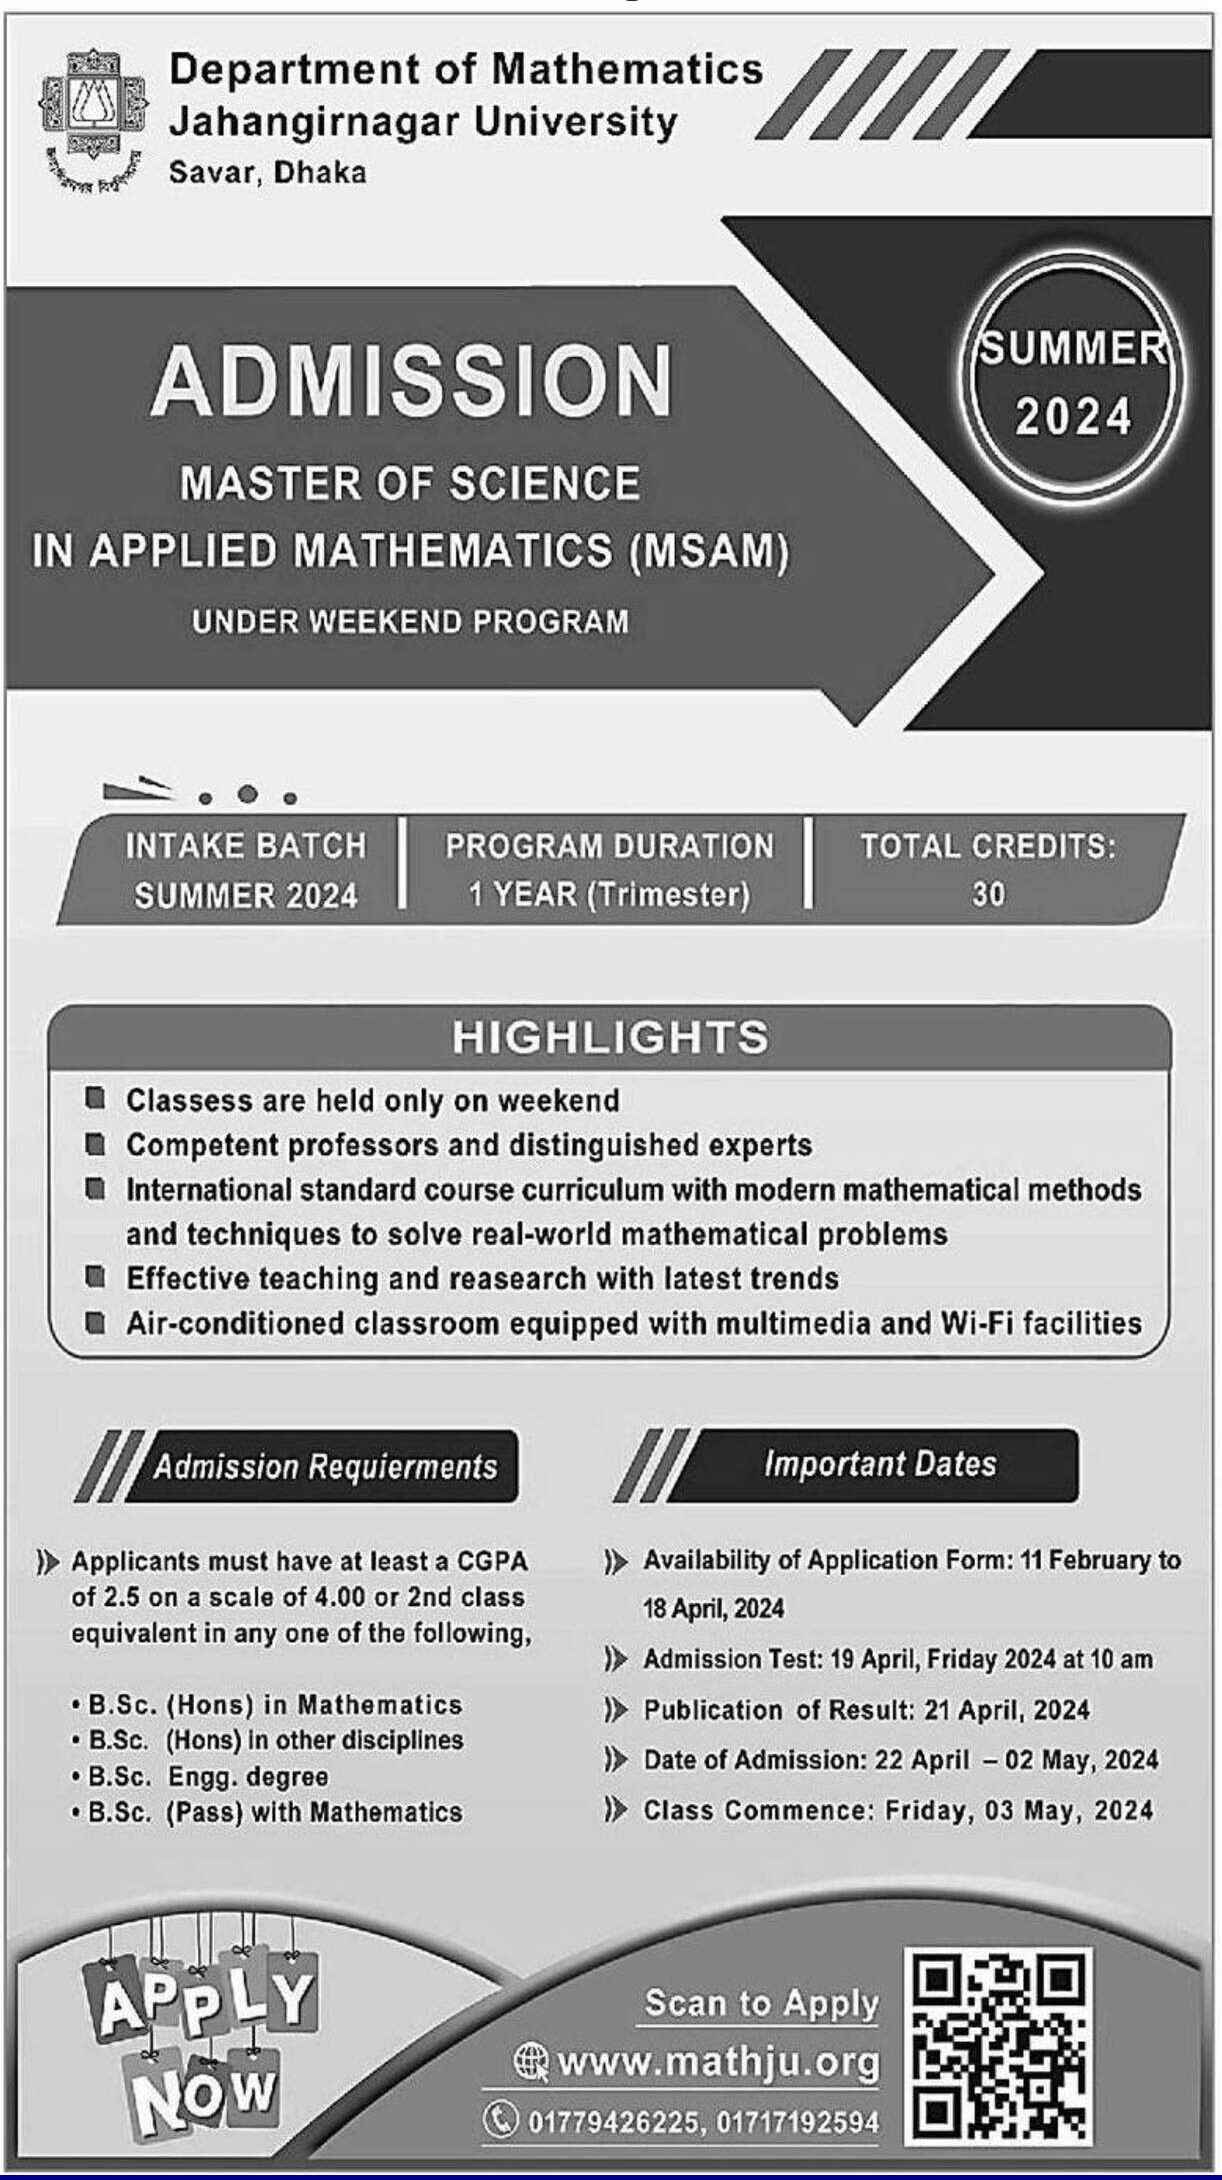 MSc in Mathematics in Jahangirnagar University